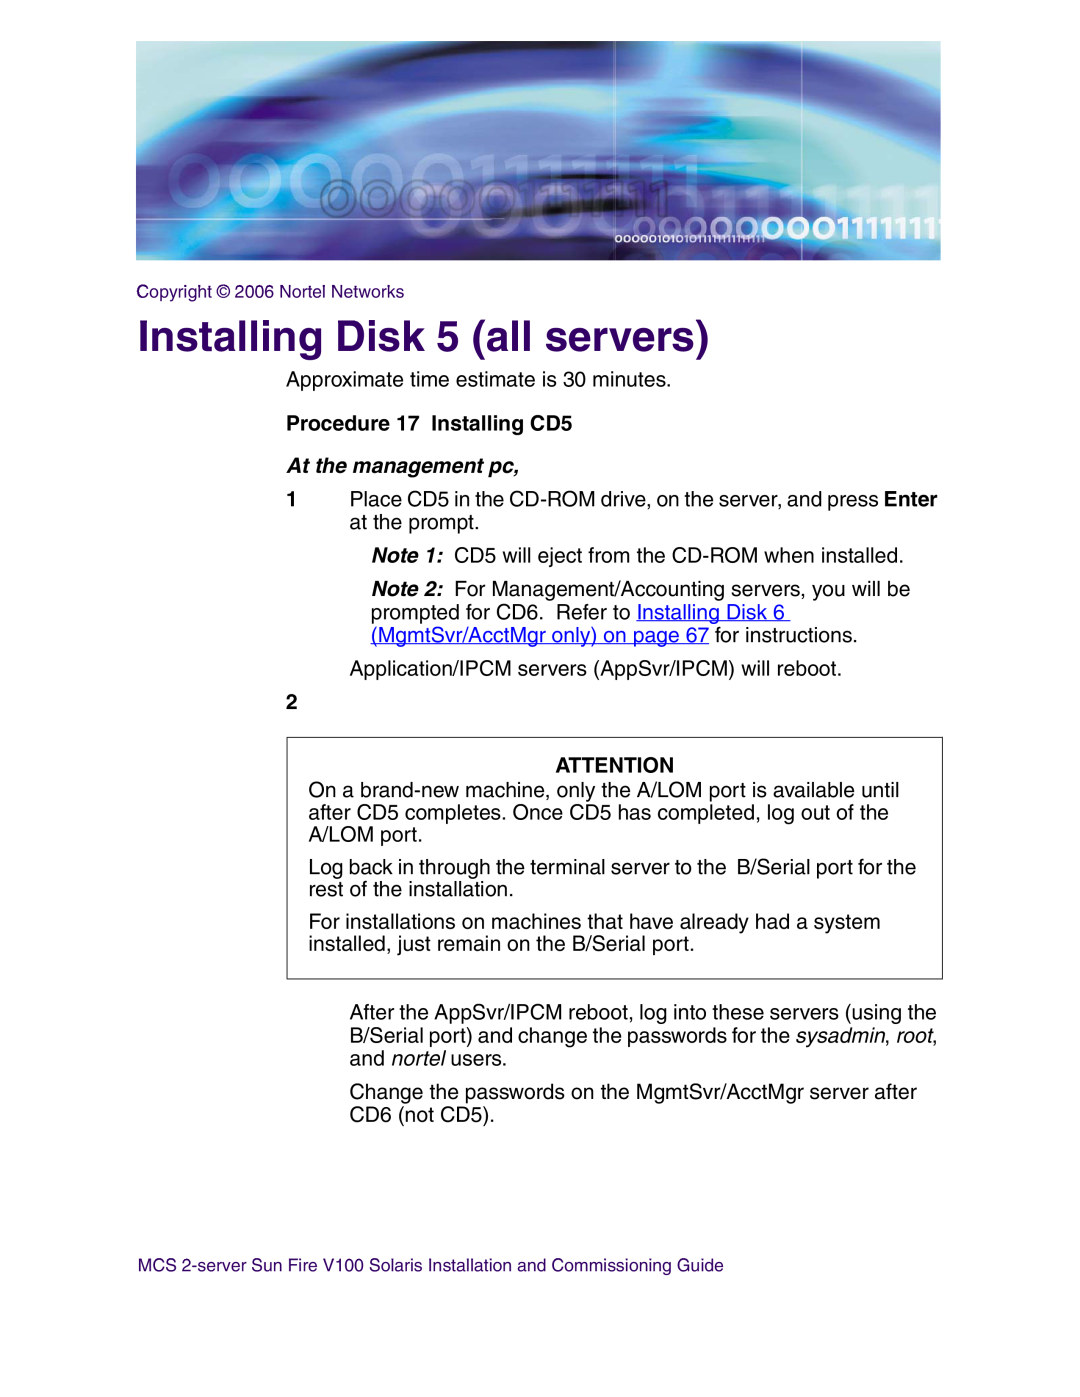 Nortel Networks V100 manual Installing Disk 5 all servers, Procedure 17 Installing CD5, At the management pc 